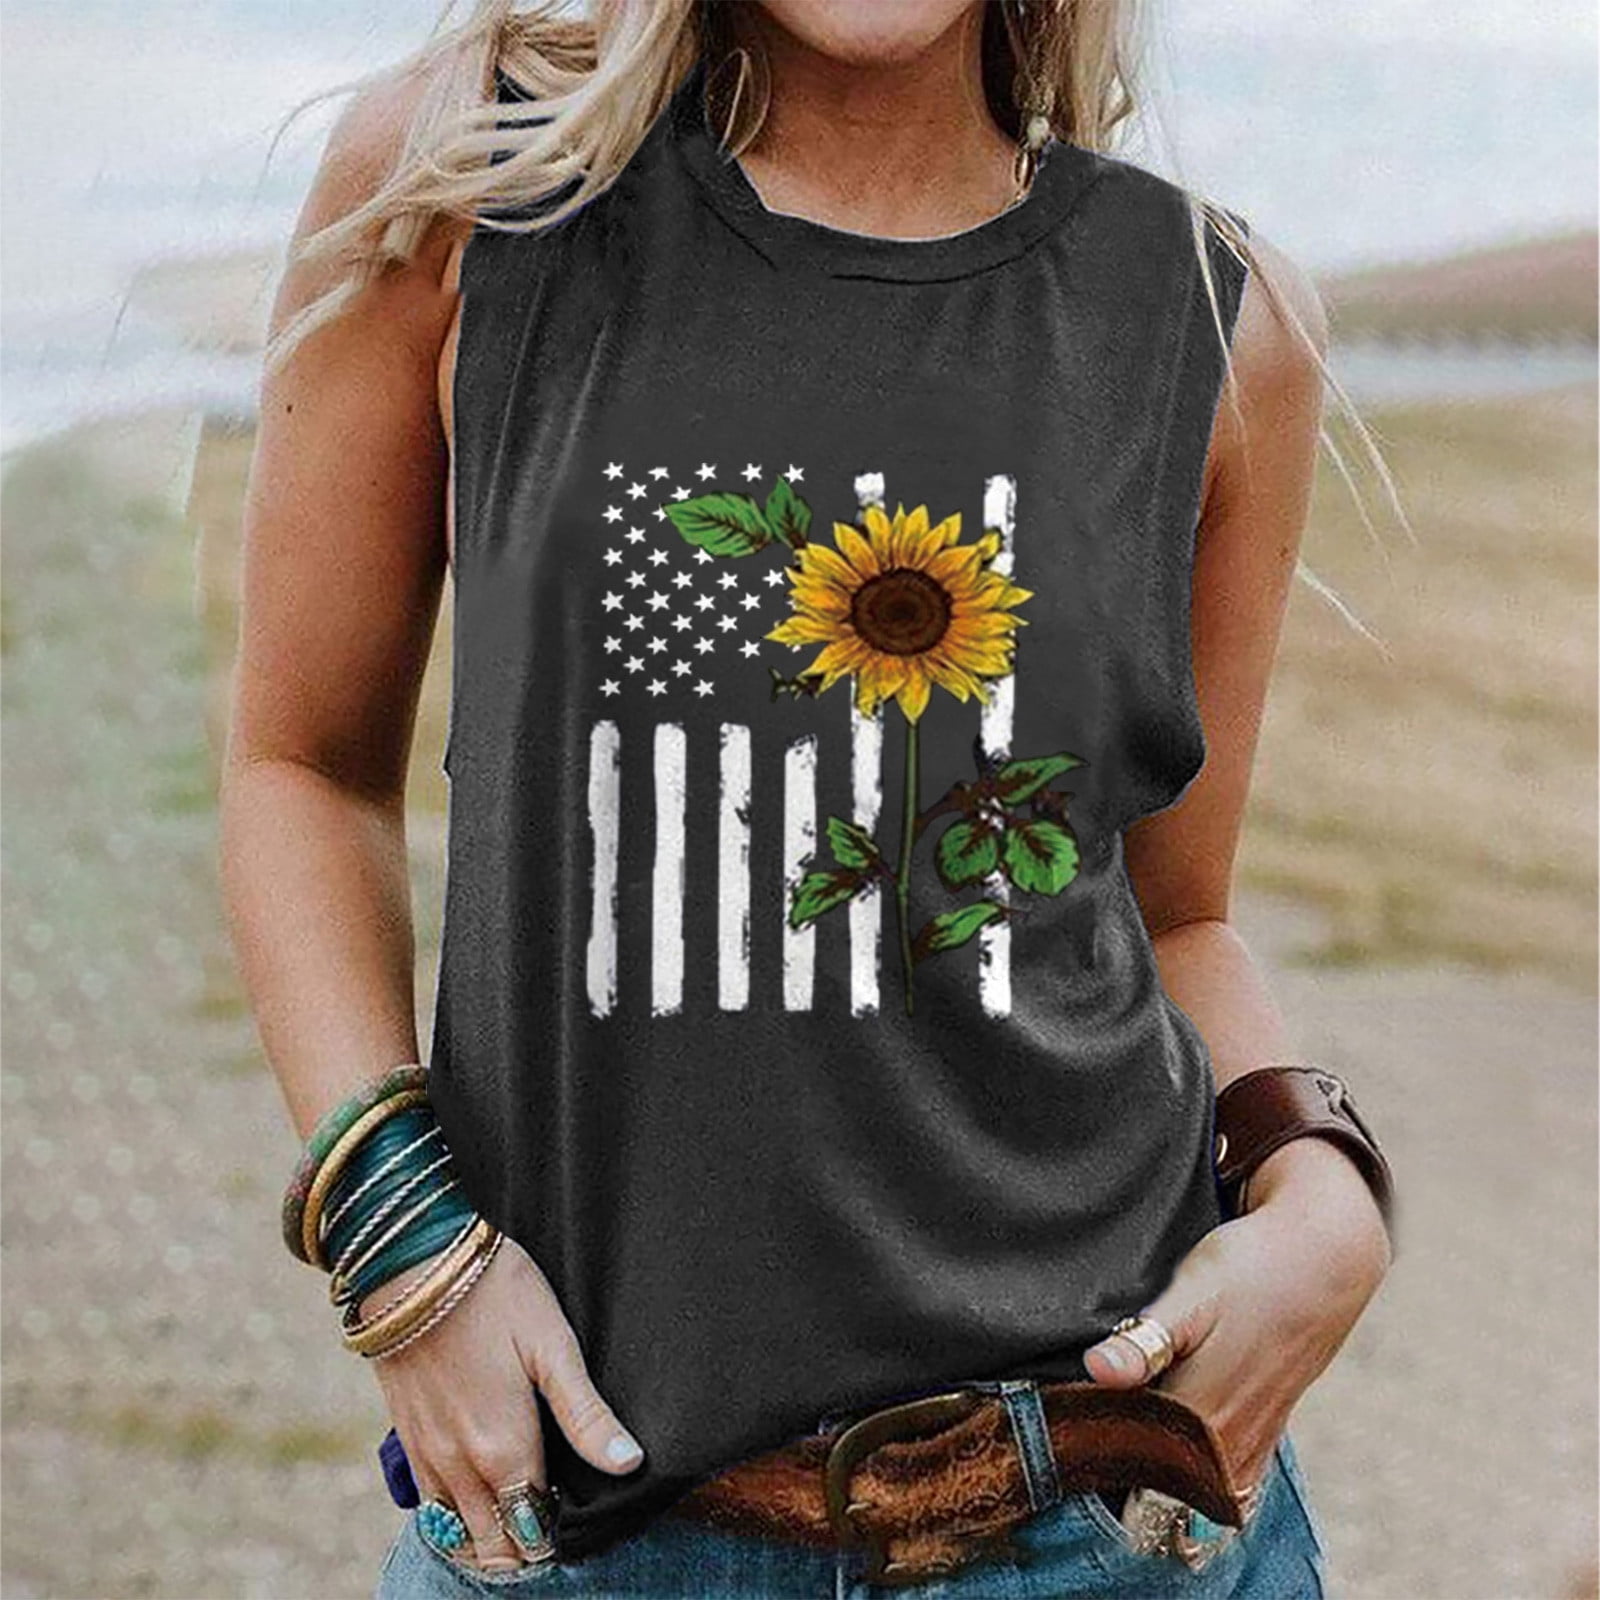 Rbaofujie T Shirts for Summer Women American Tank Tops Usa Flag Stars Printed Sleeveless T-Shirt Tee Tops Dark Gray Tank Clearance - Walmart.com